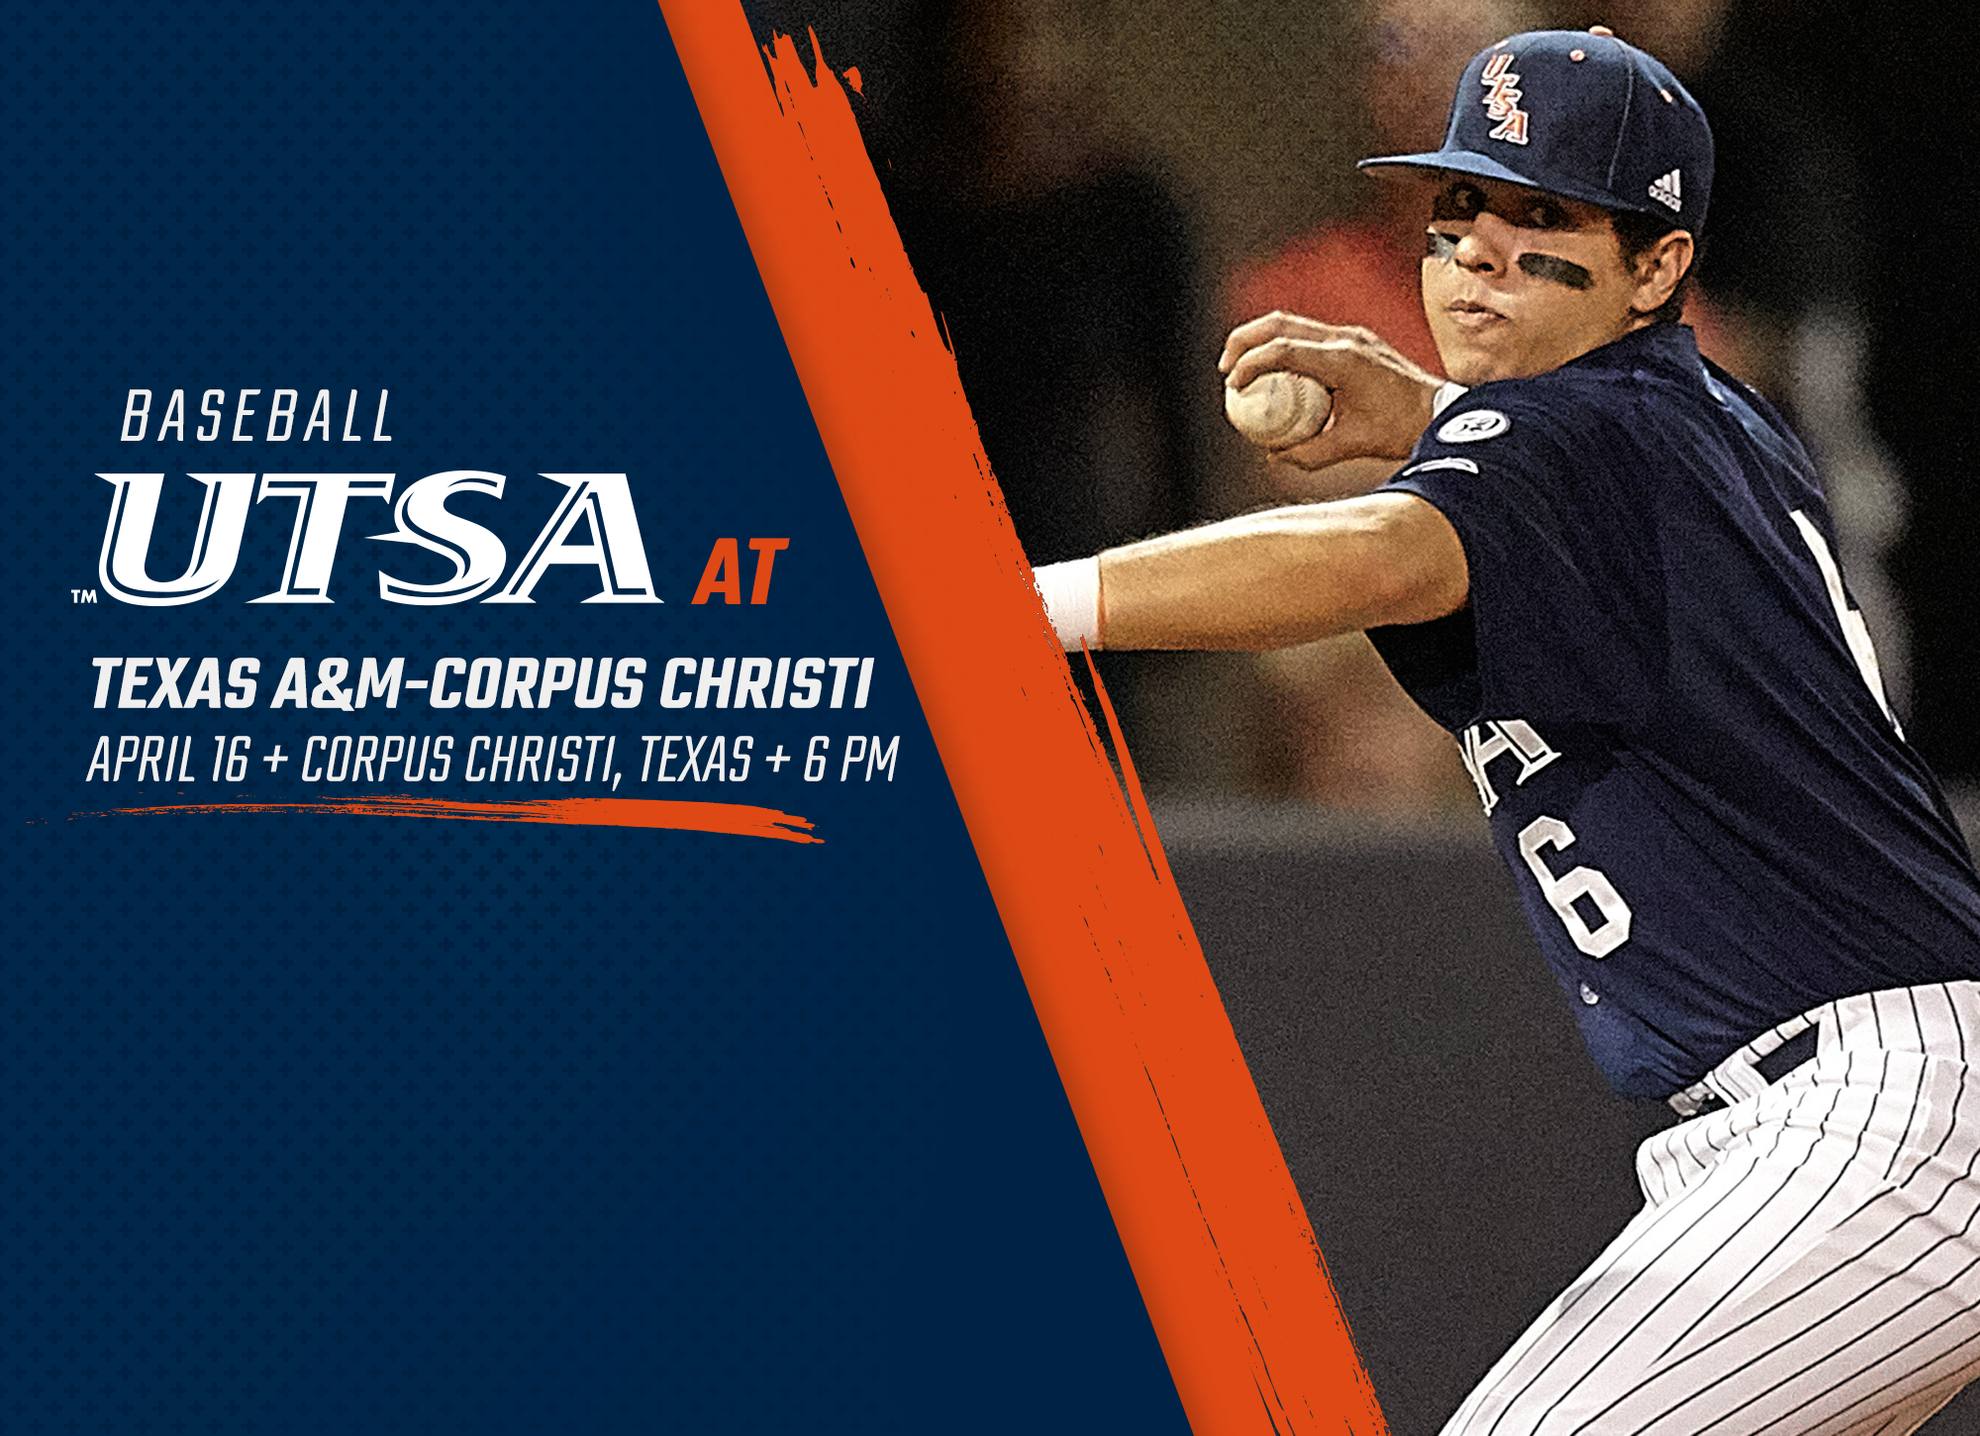 Baseball - Texas A&M-Corpus Christi Athletics